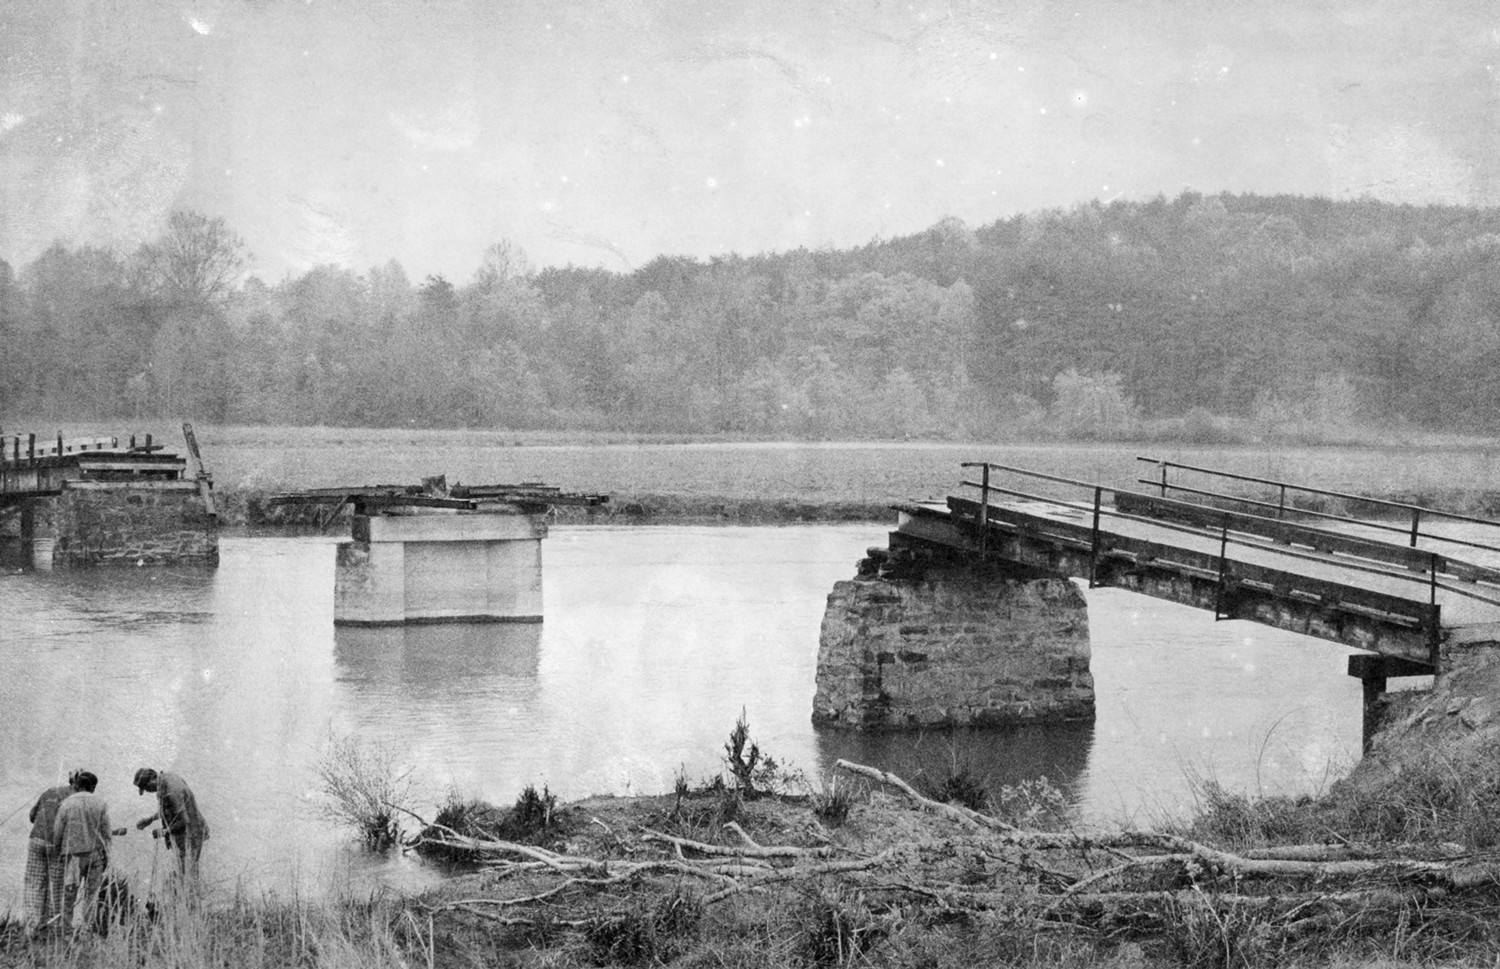 Prather's Covered Bridge, Westminister South Carolina 